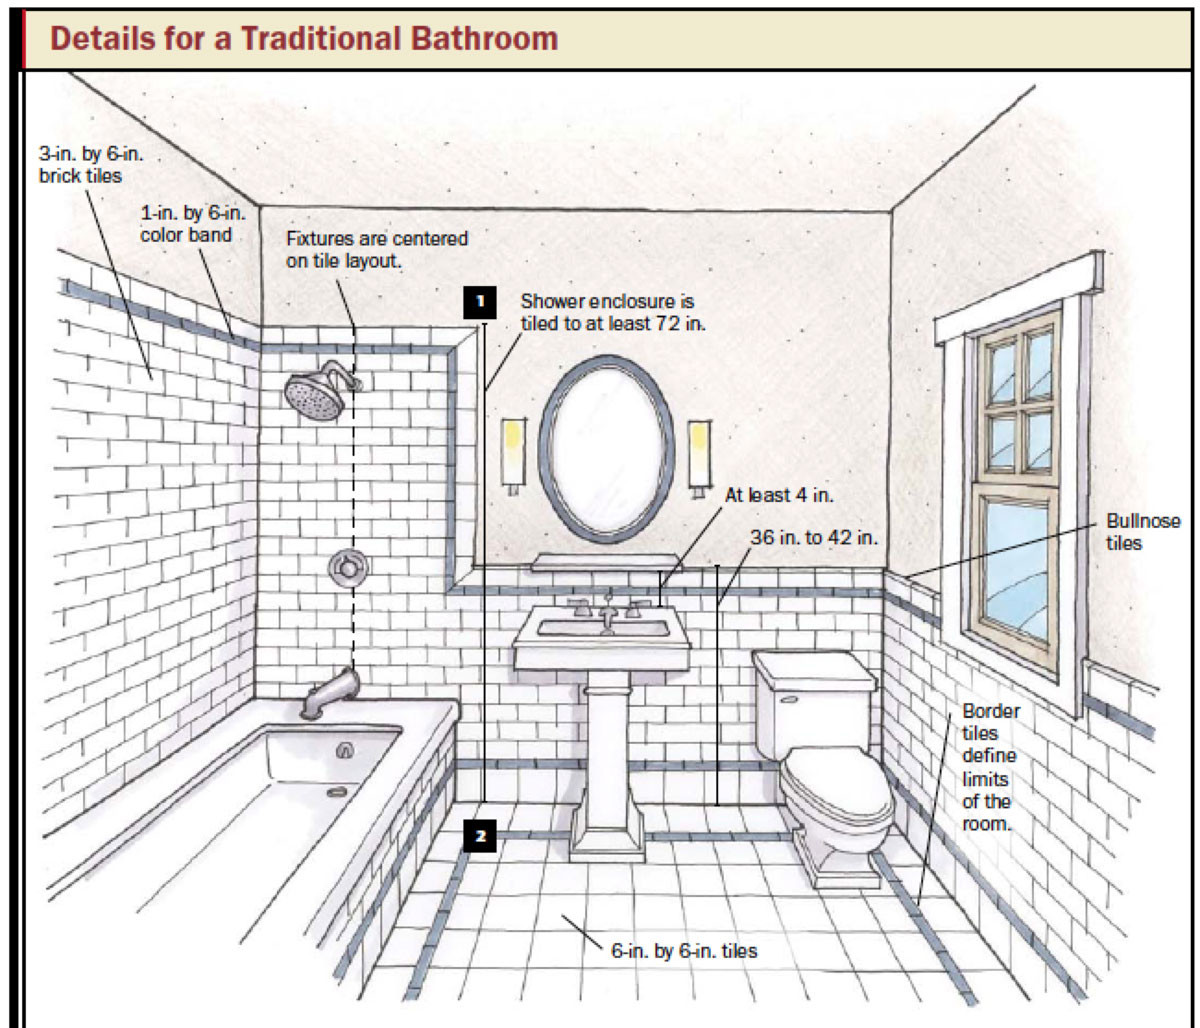 Free Online Bathroom Design Tool Lovely Bathroom Design Amp Planning Tips Taymor Of Free Online Bathroom Design Tool 